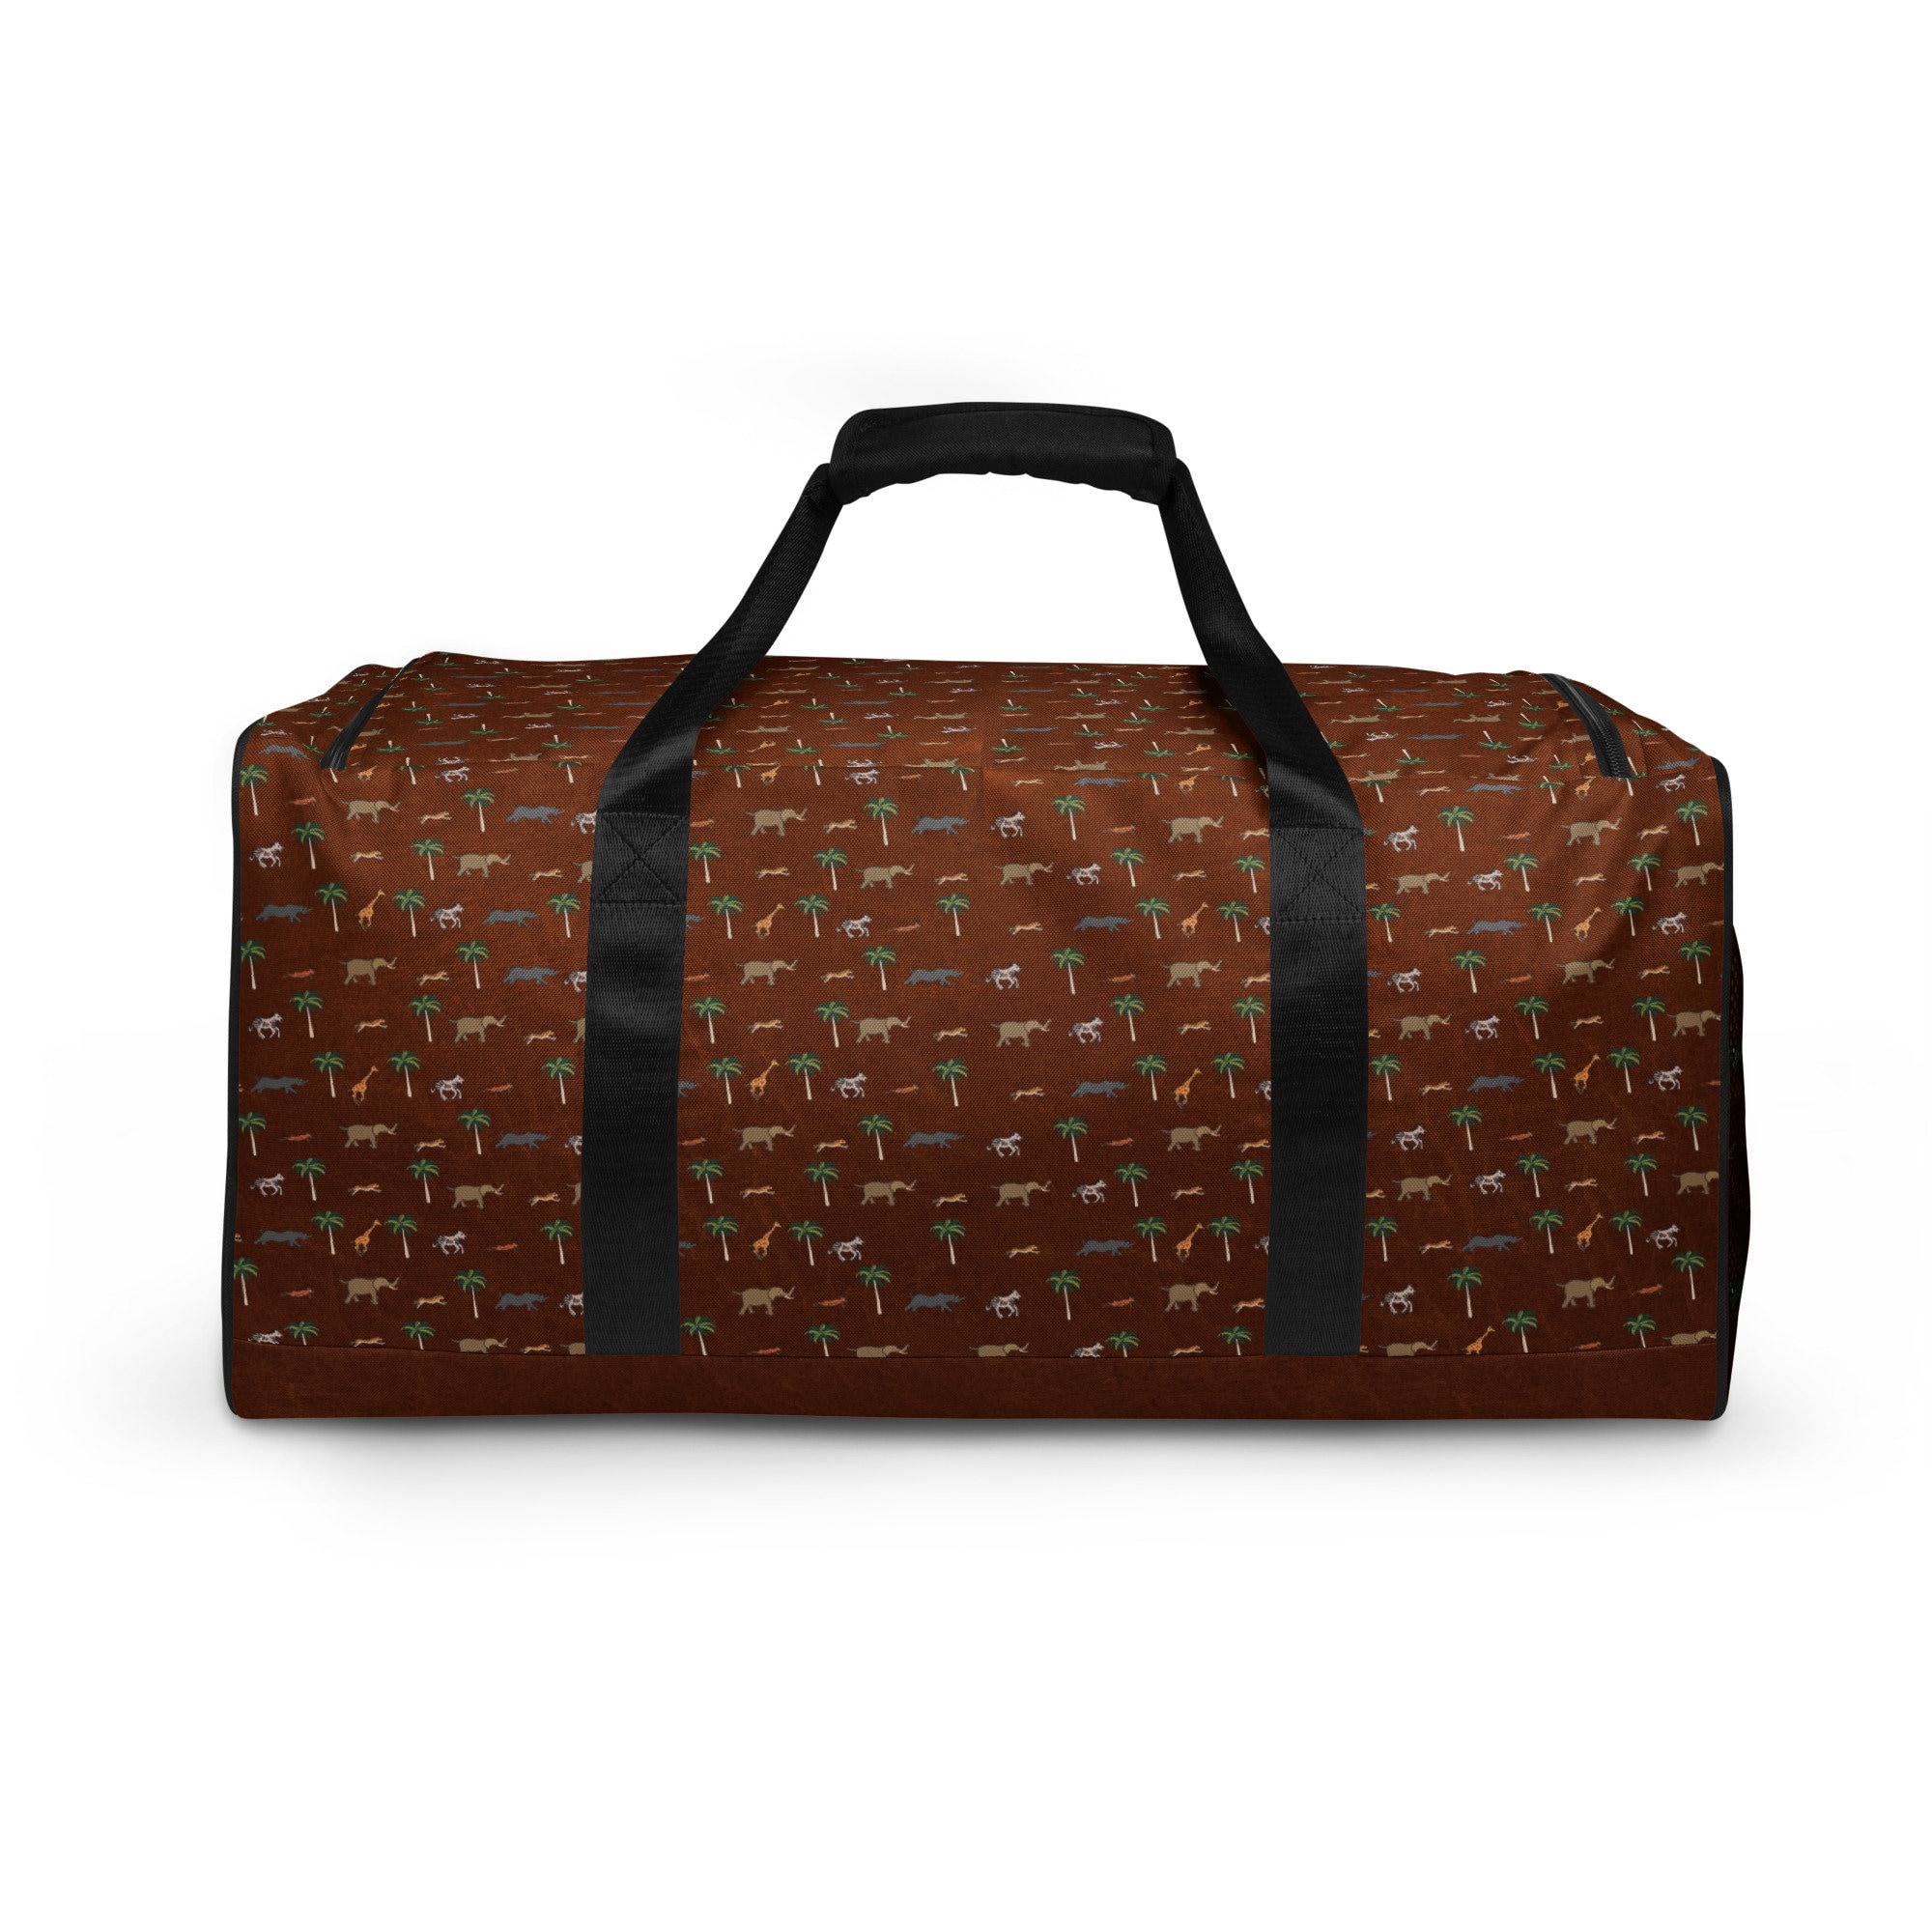 louis vuitton luggage darjeeling limited luggage pattern